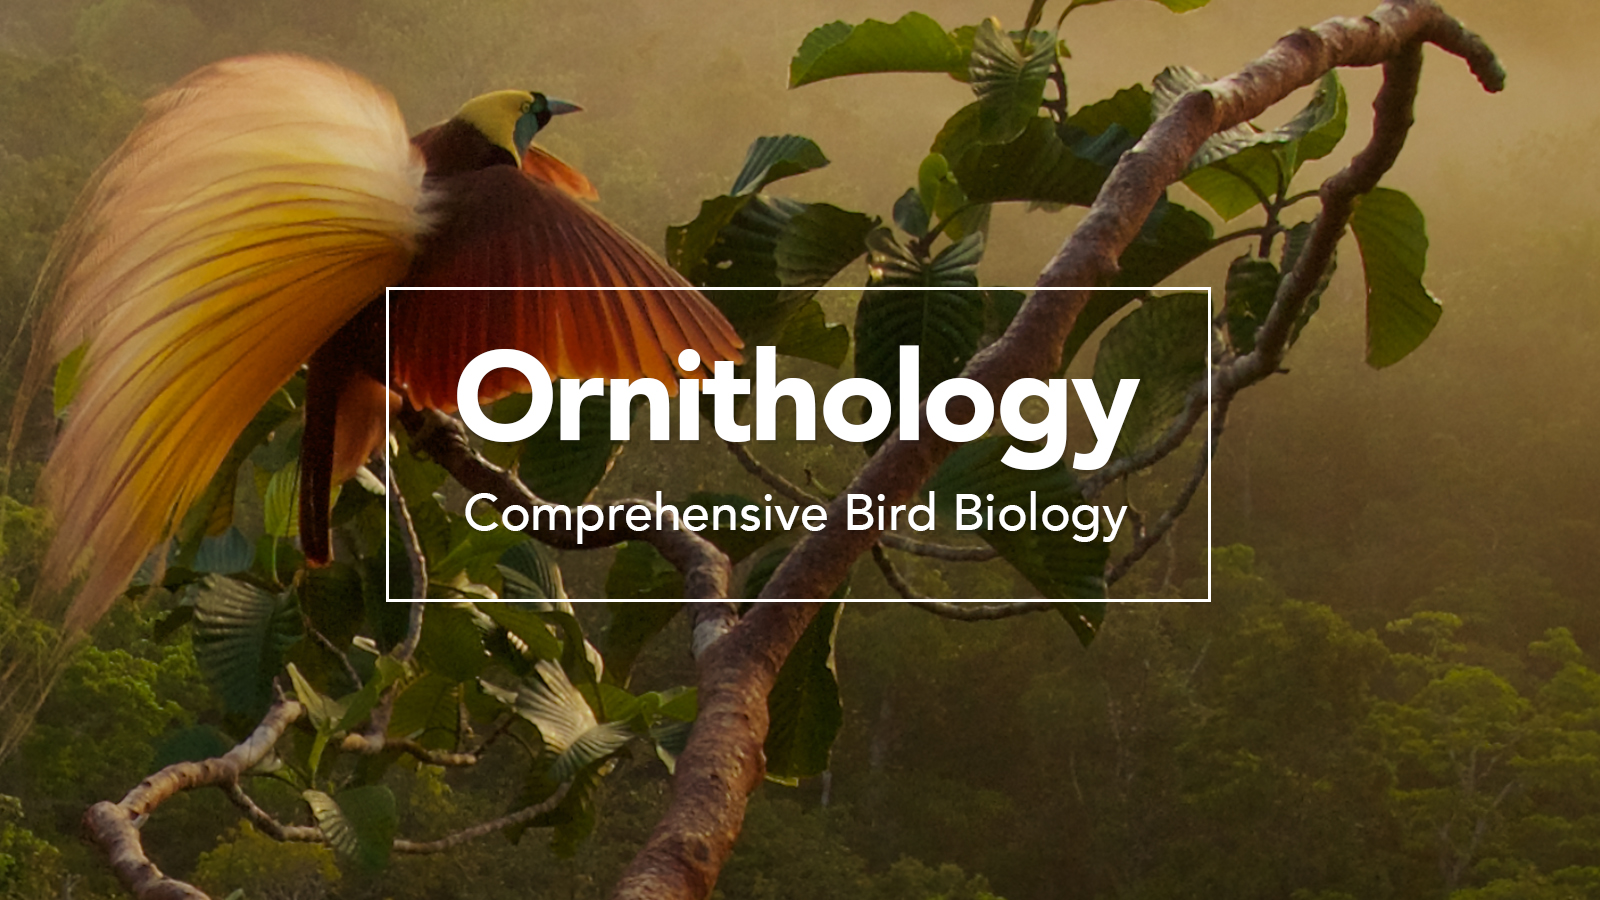 Ornithology: Comprehensive Bird Biology